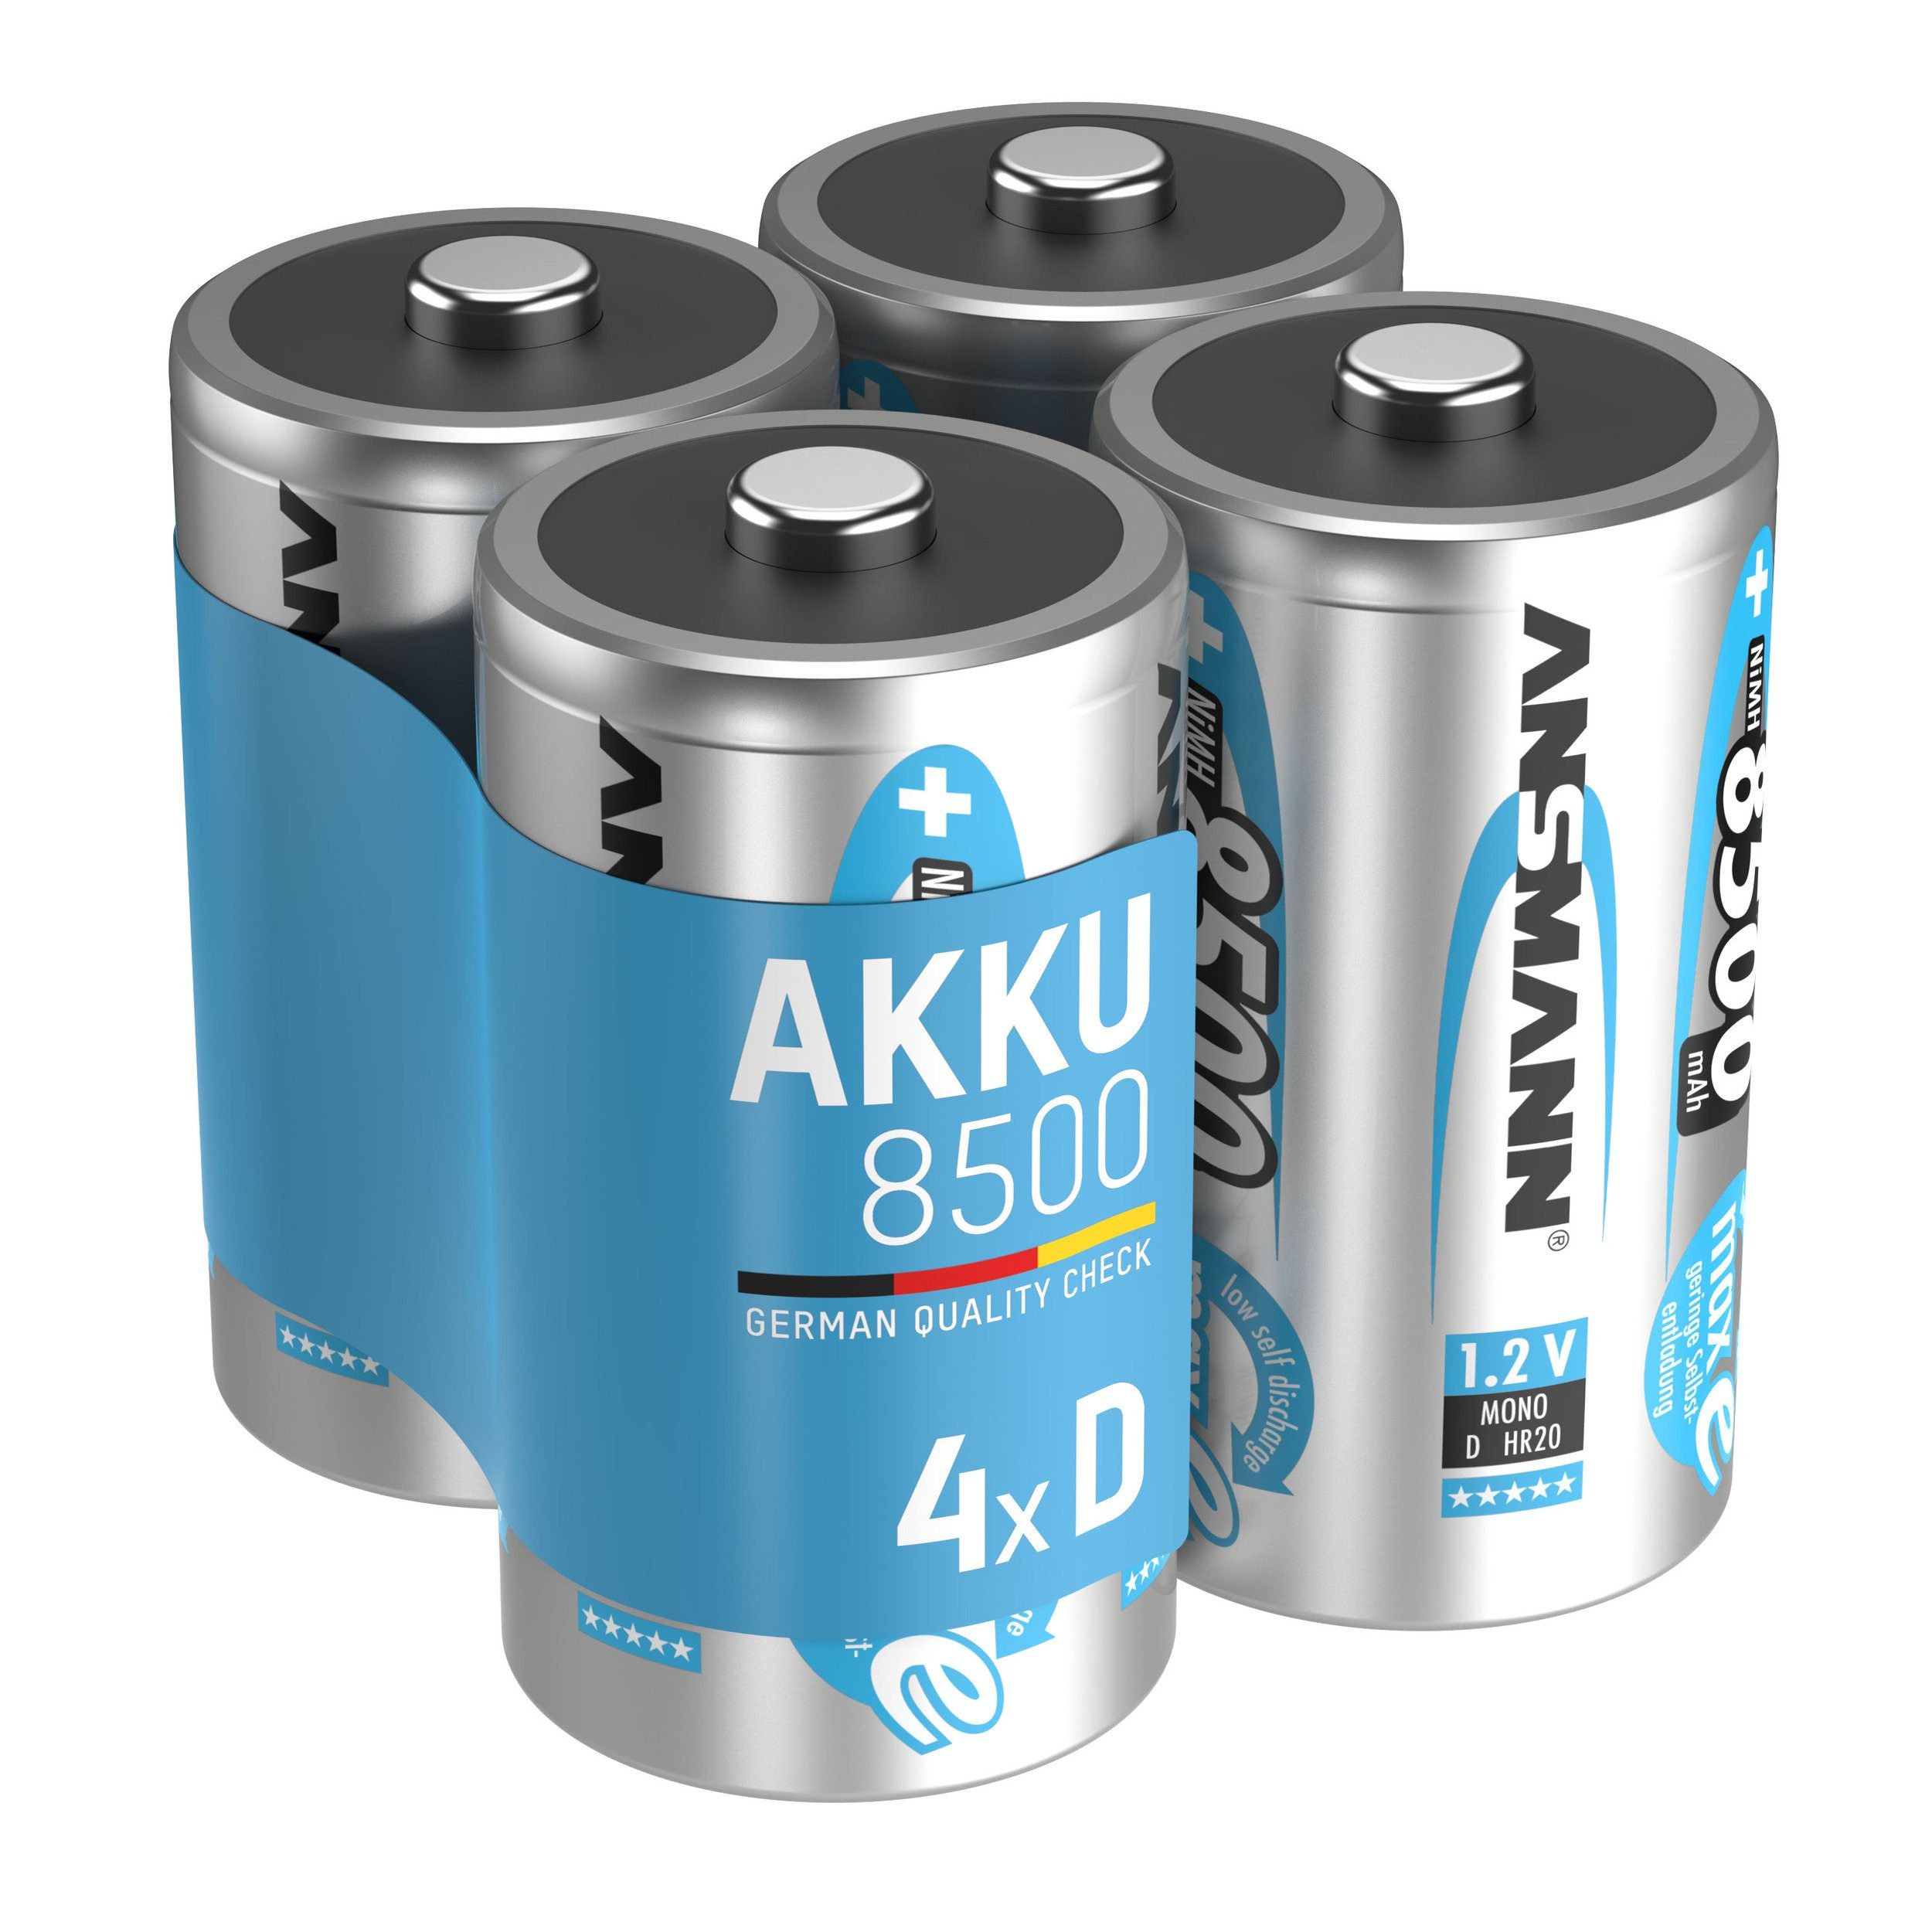 ANSMANN® Akku D 8500mAh Mono NiMH 1,2V – 1000x wiederaufladbar (4 Stück) Akku 8500 mAh (1.2 V)